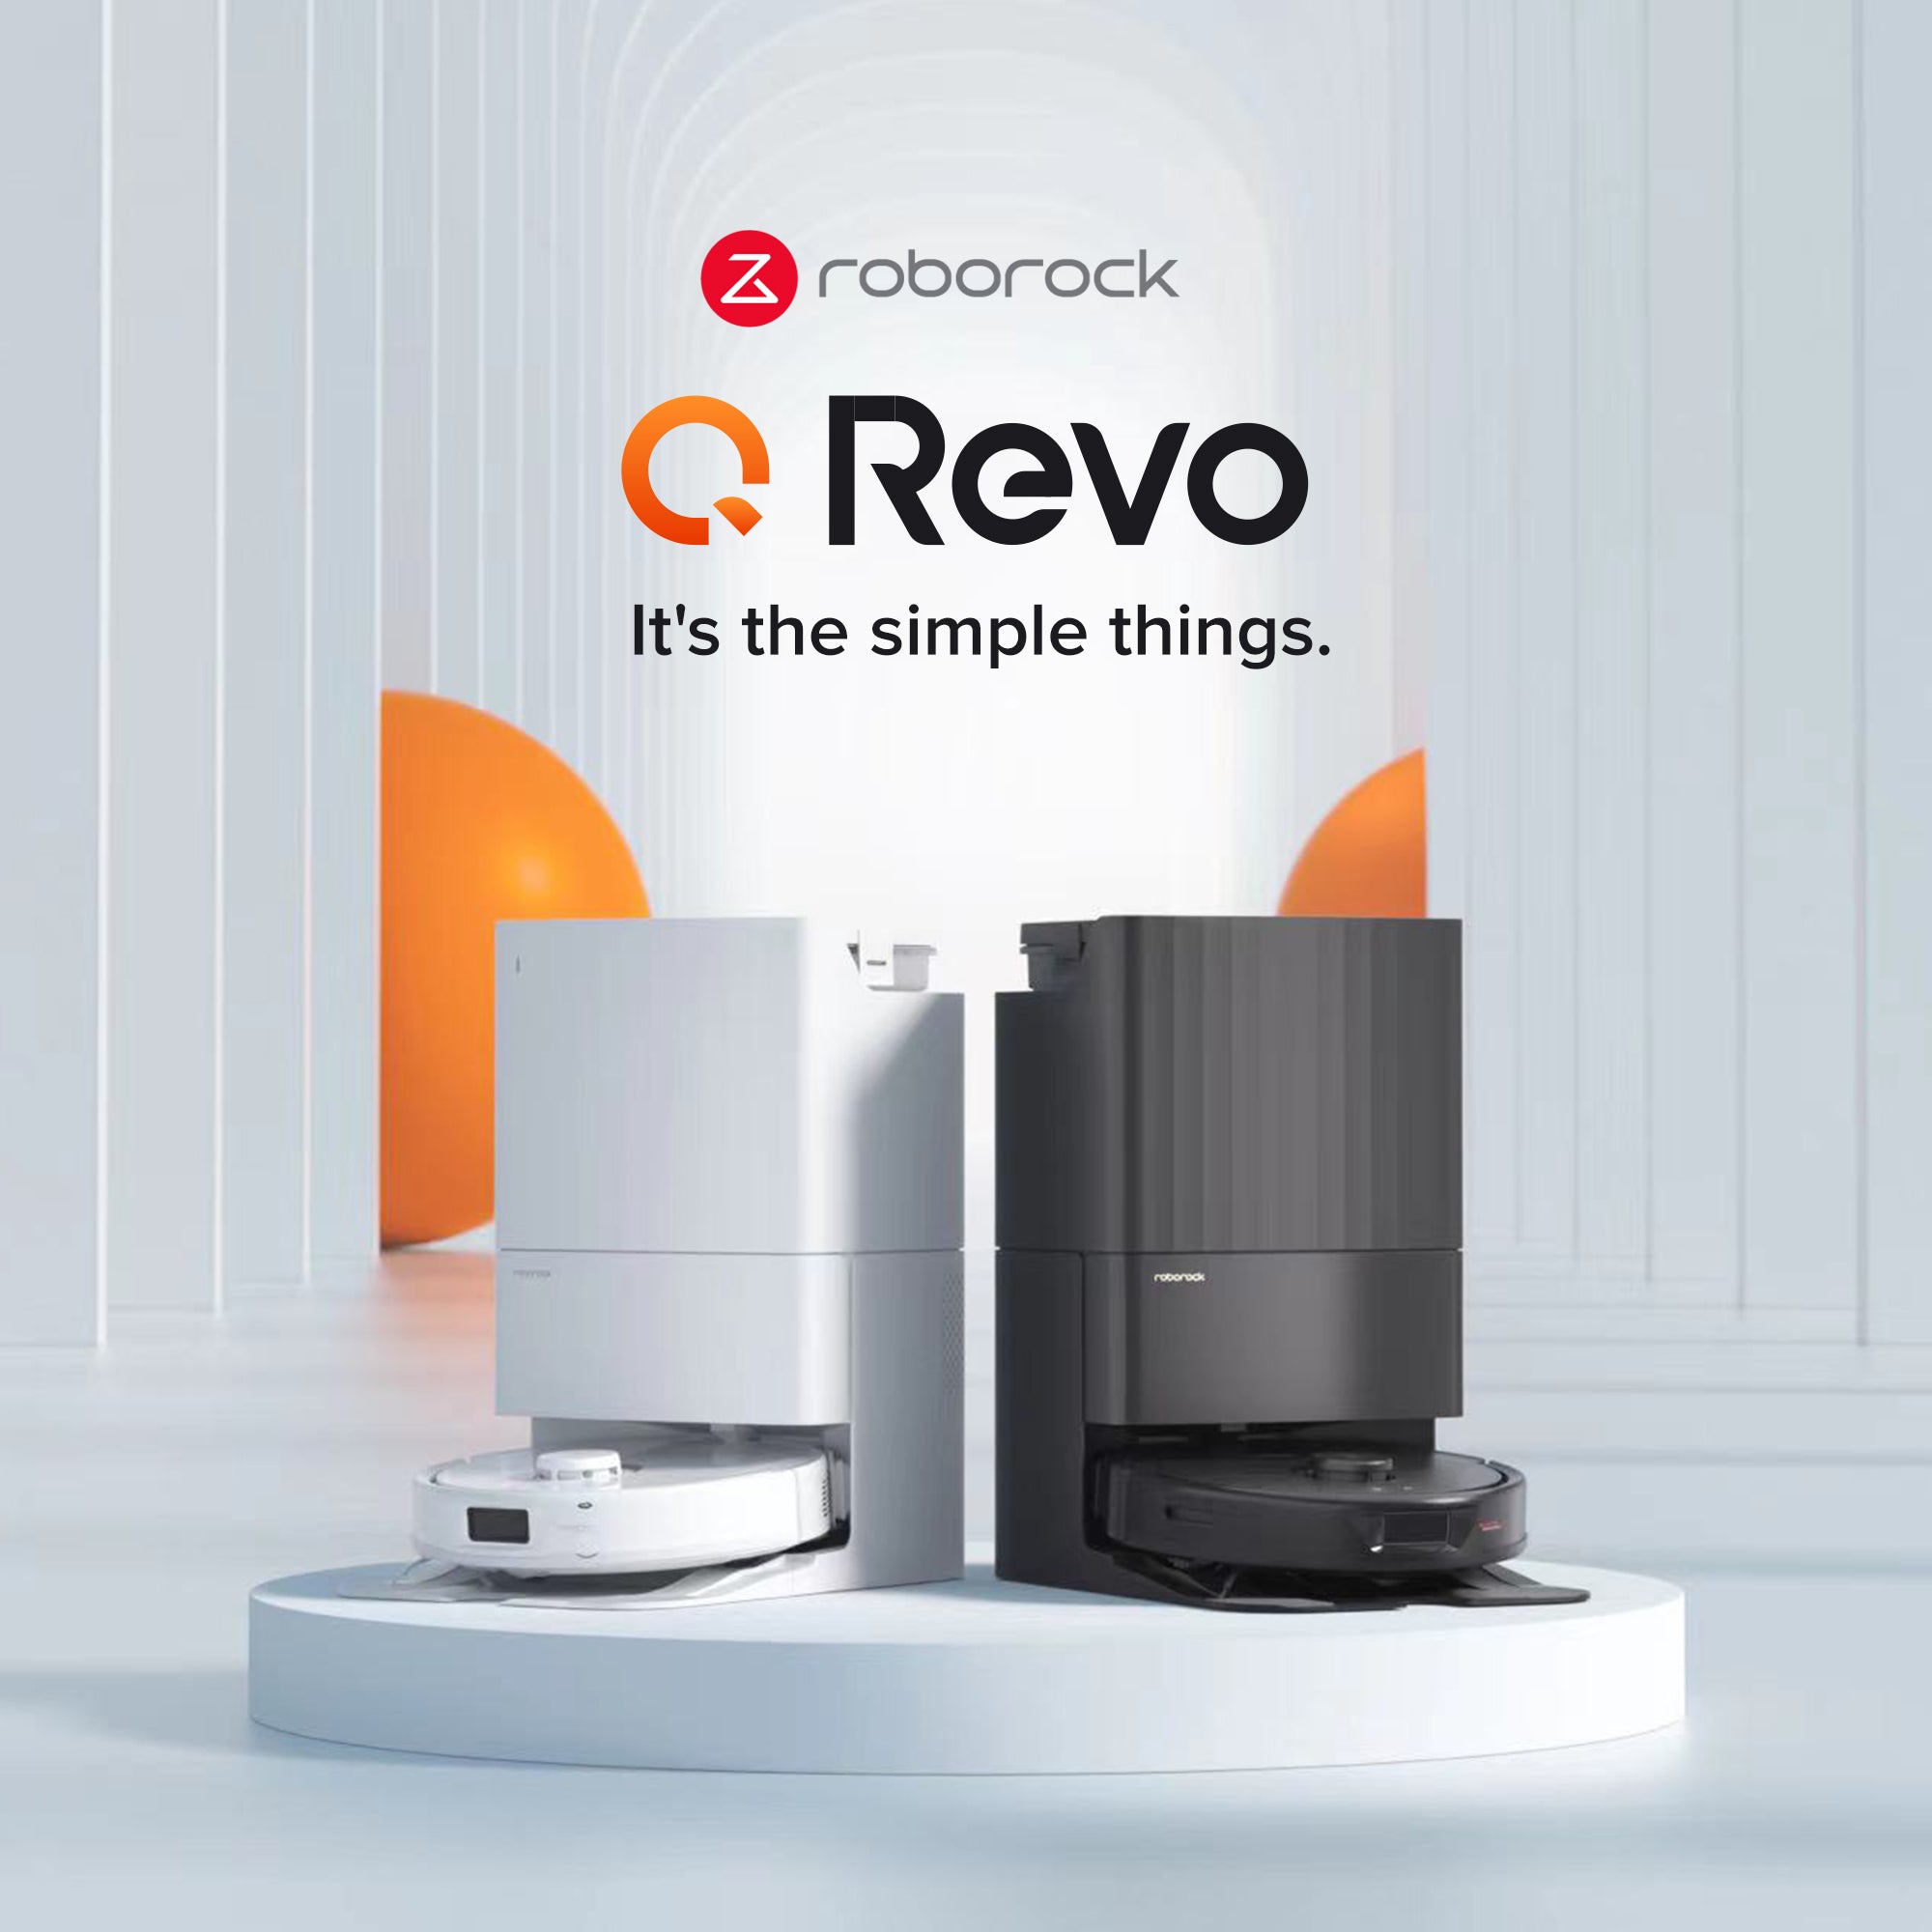 Roborock Q Revo: Robot aspirador con función automática de vaciado